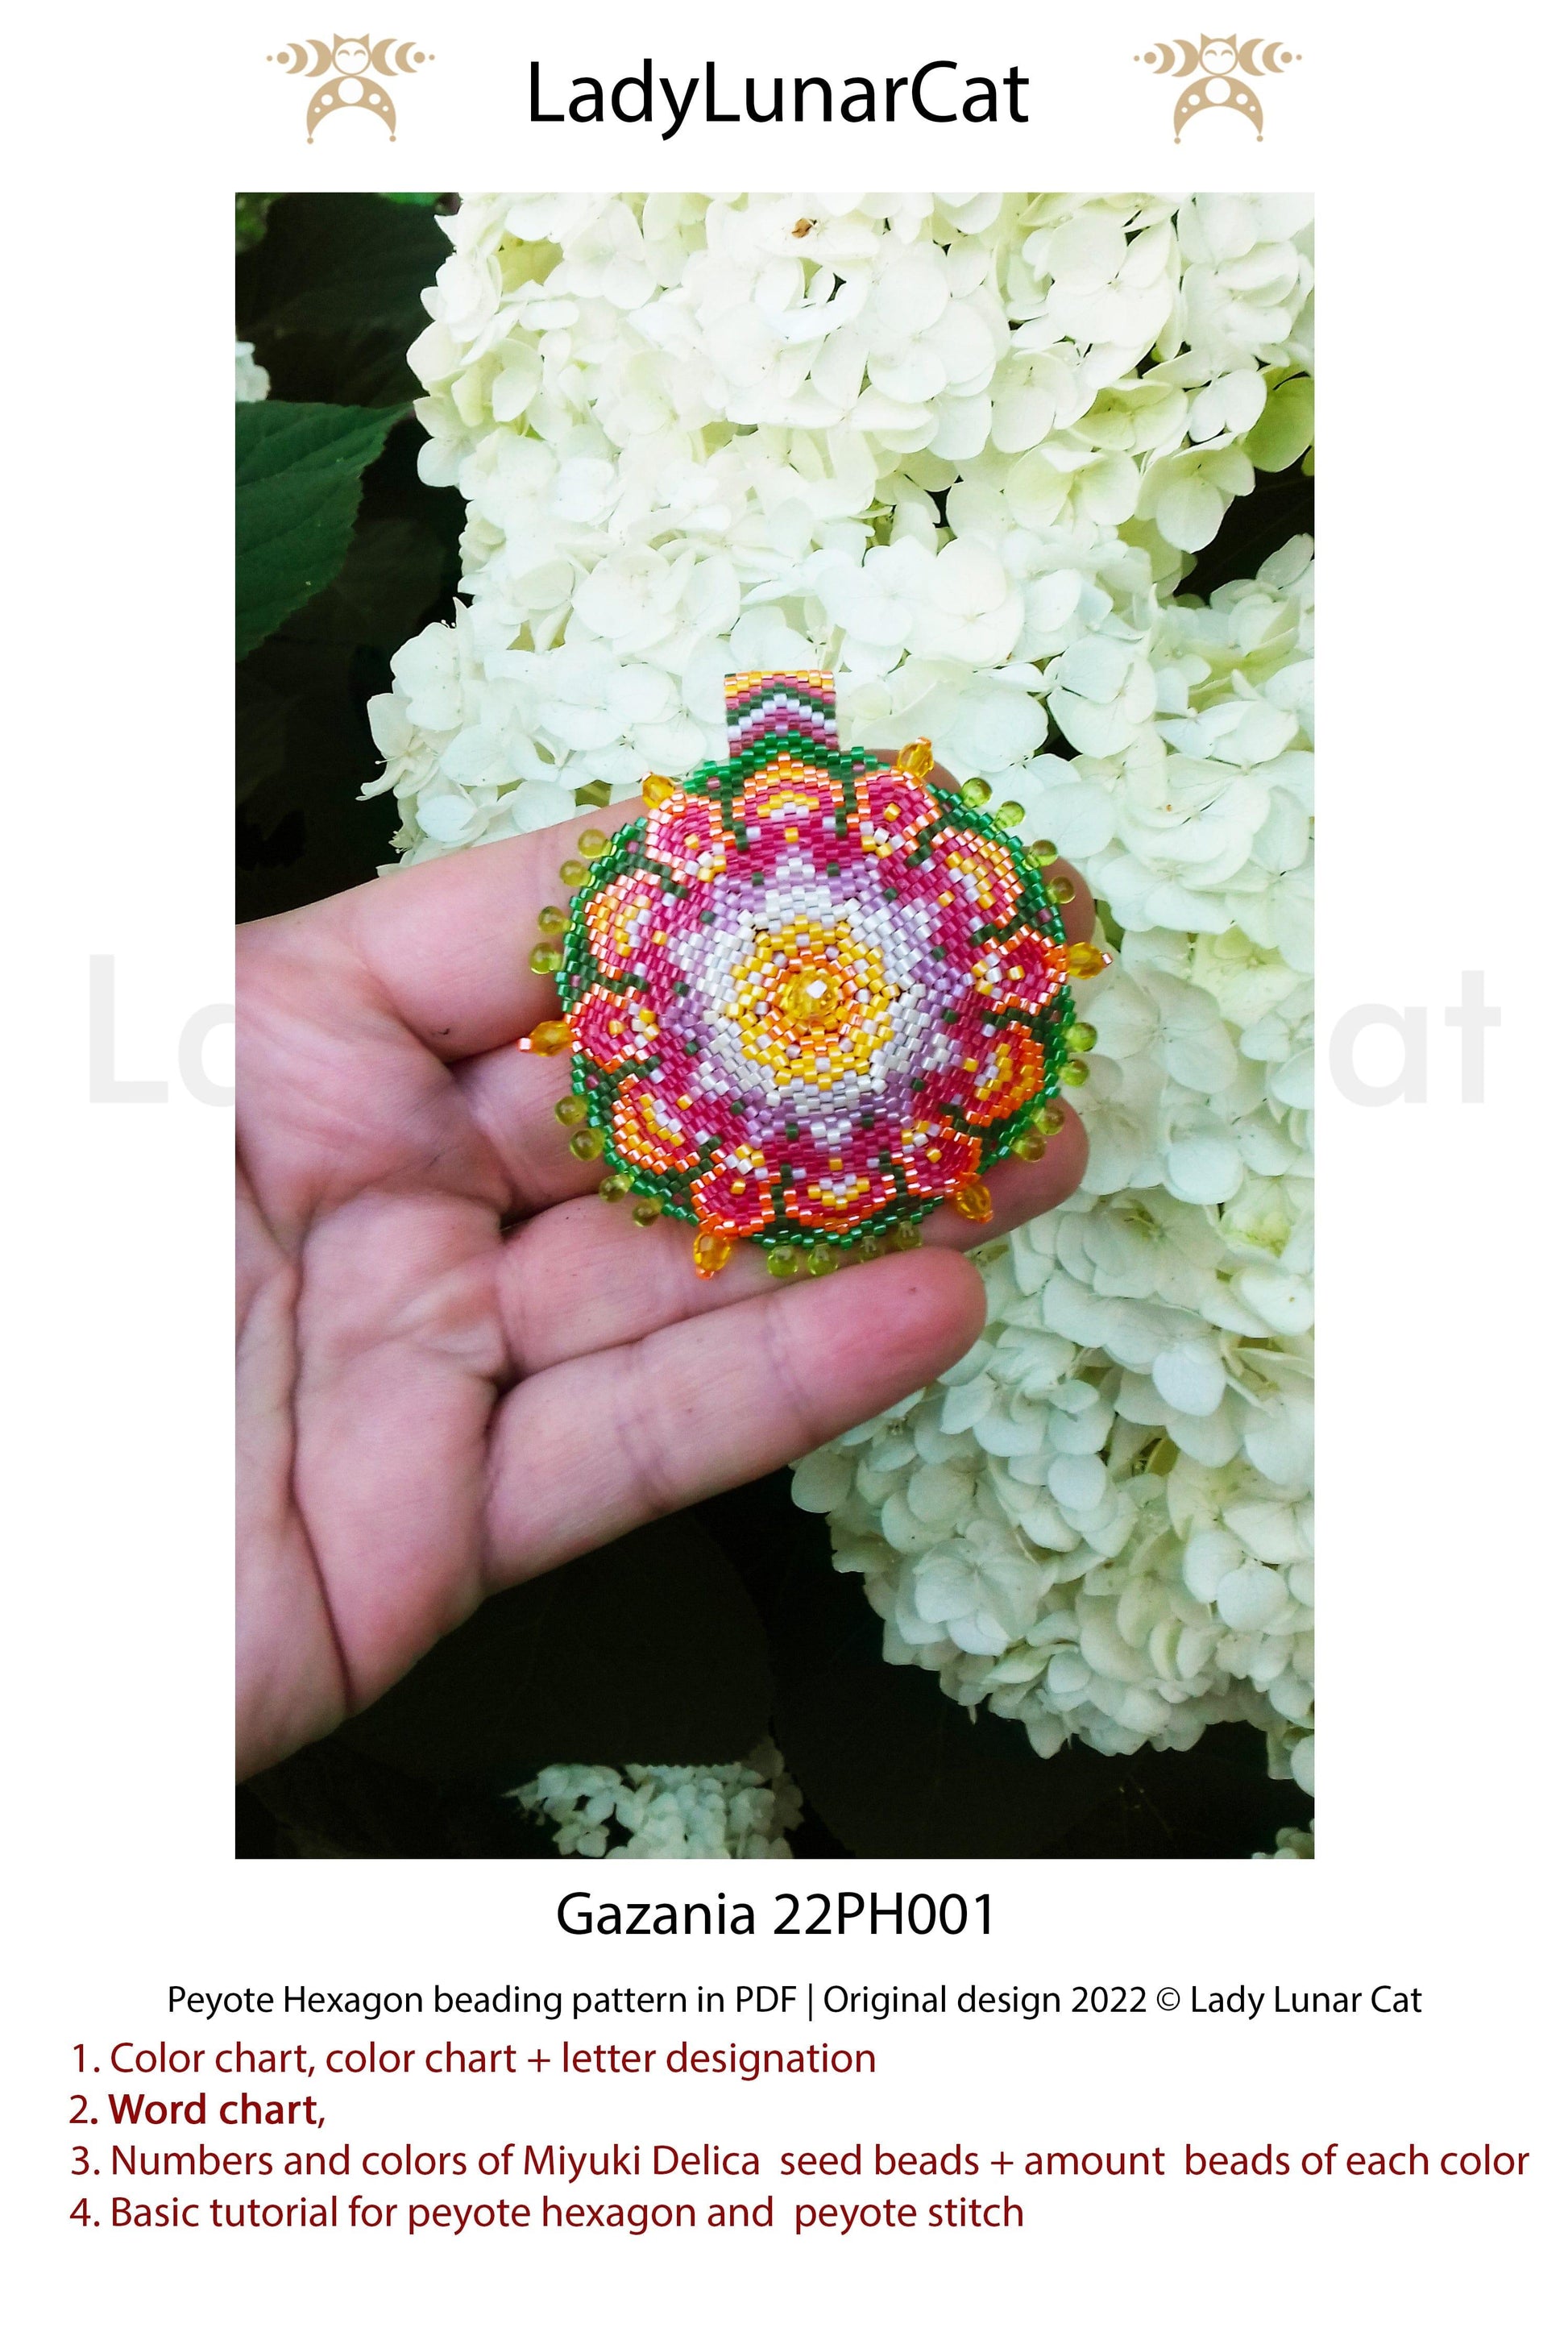 Peyote hexagon pattern for beading Gazania 22PH001 LadyLunarCat